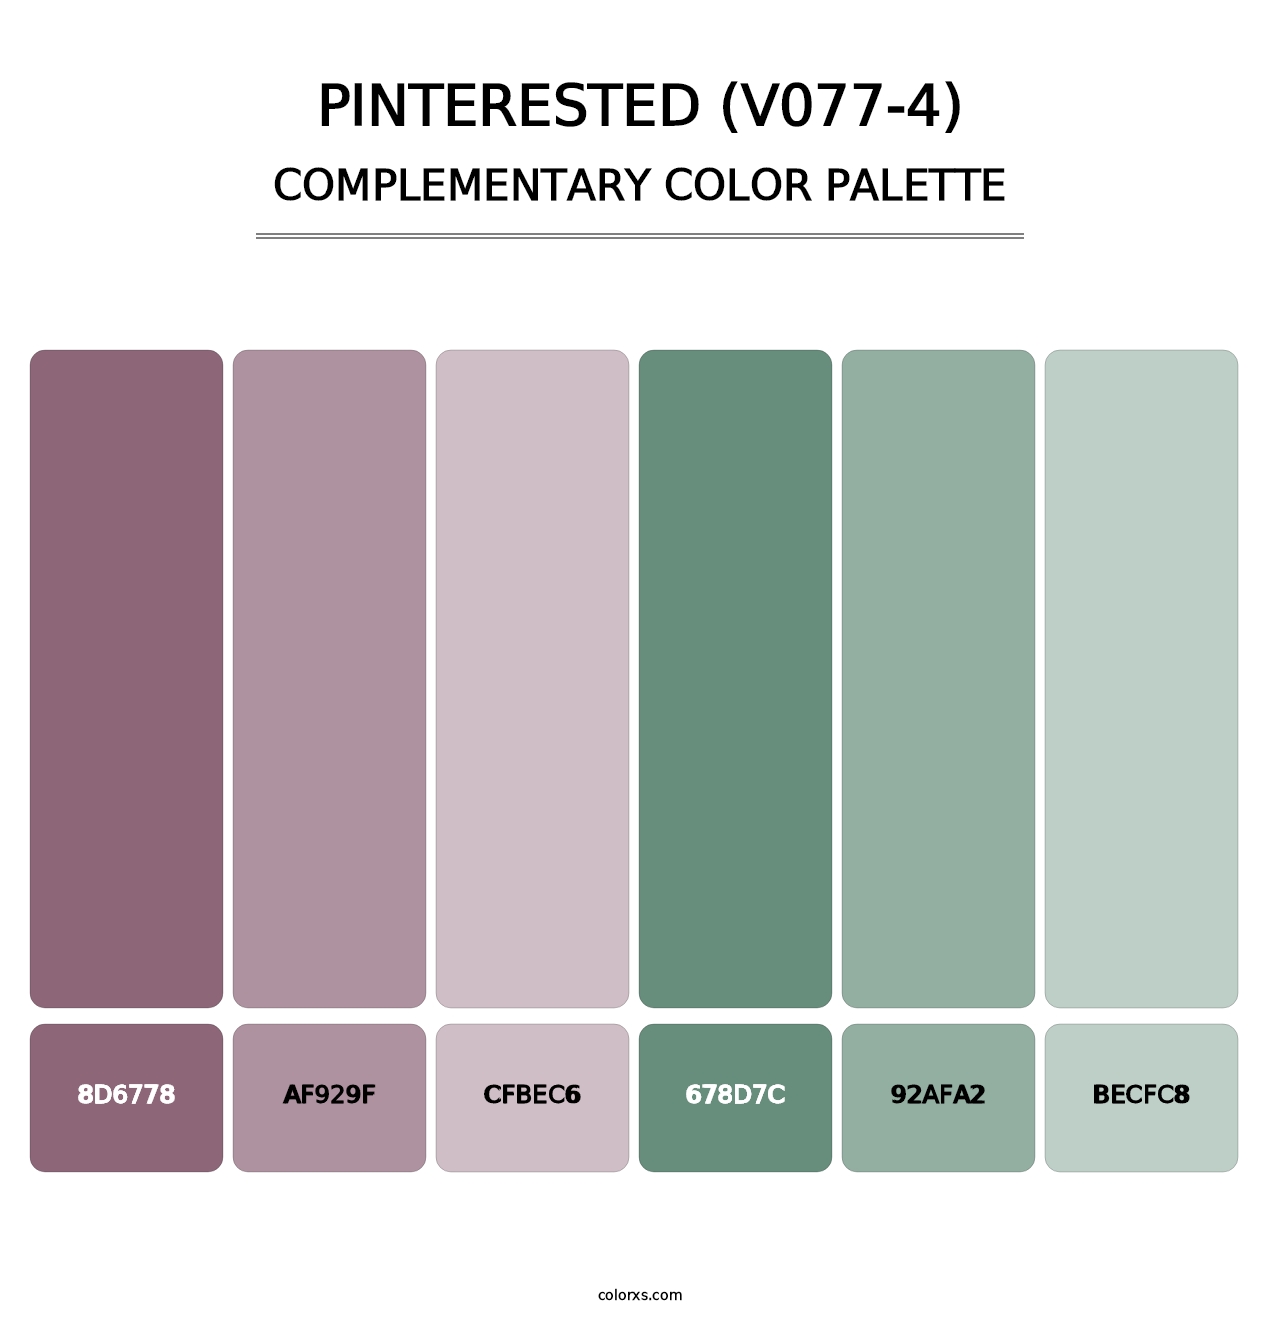 Pinterested (V077-4) - Complementary Color Palette